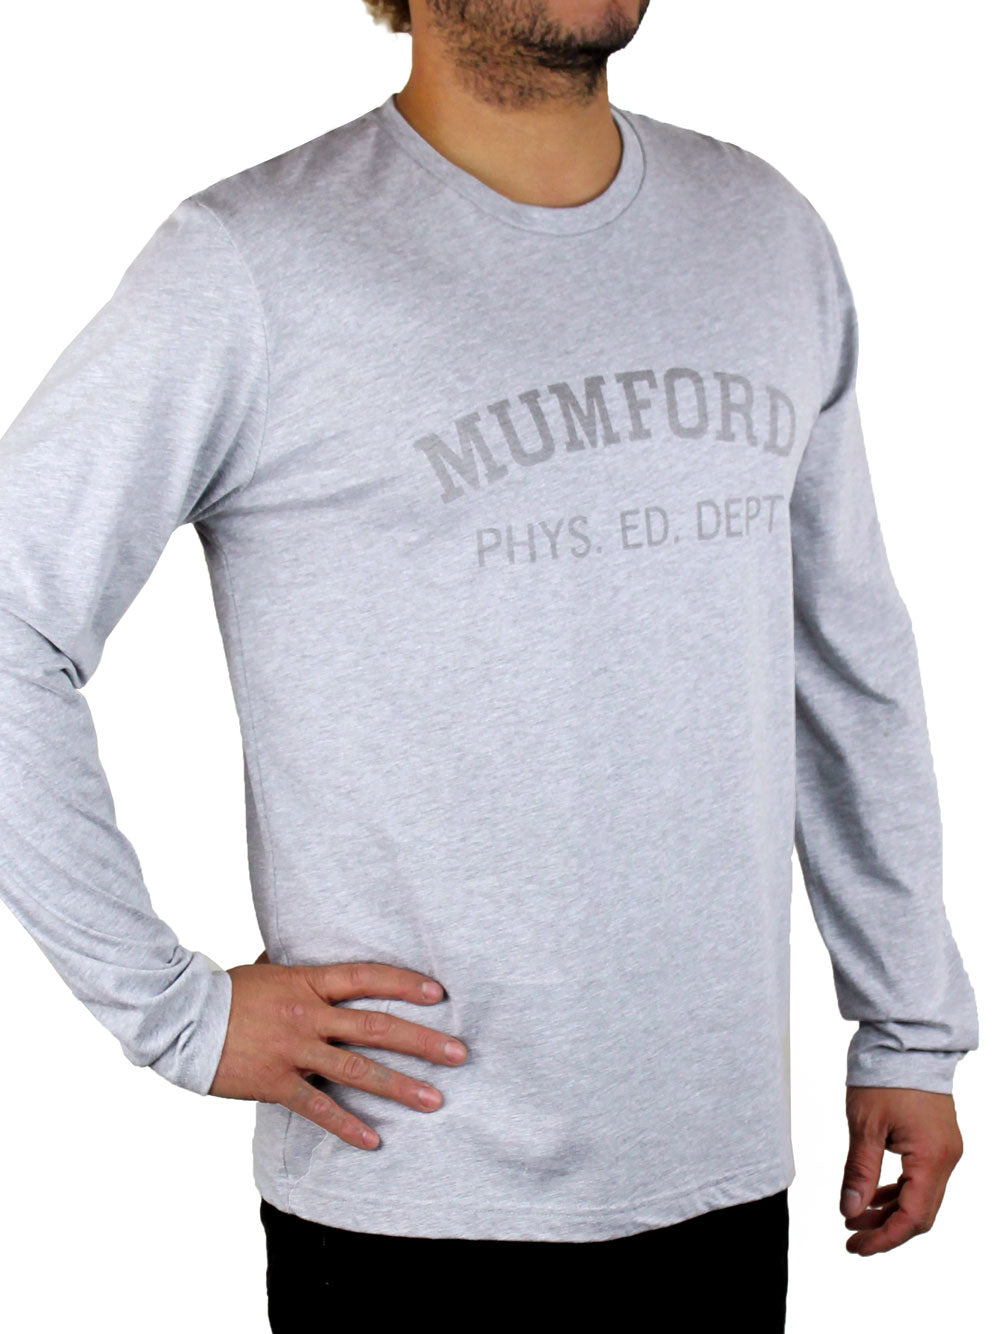 Mumford Phys. Ed. Dept. Shirt Side View